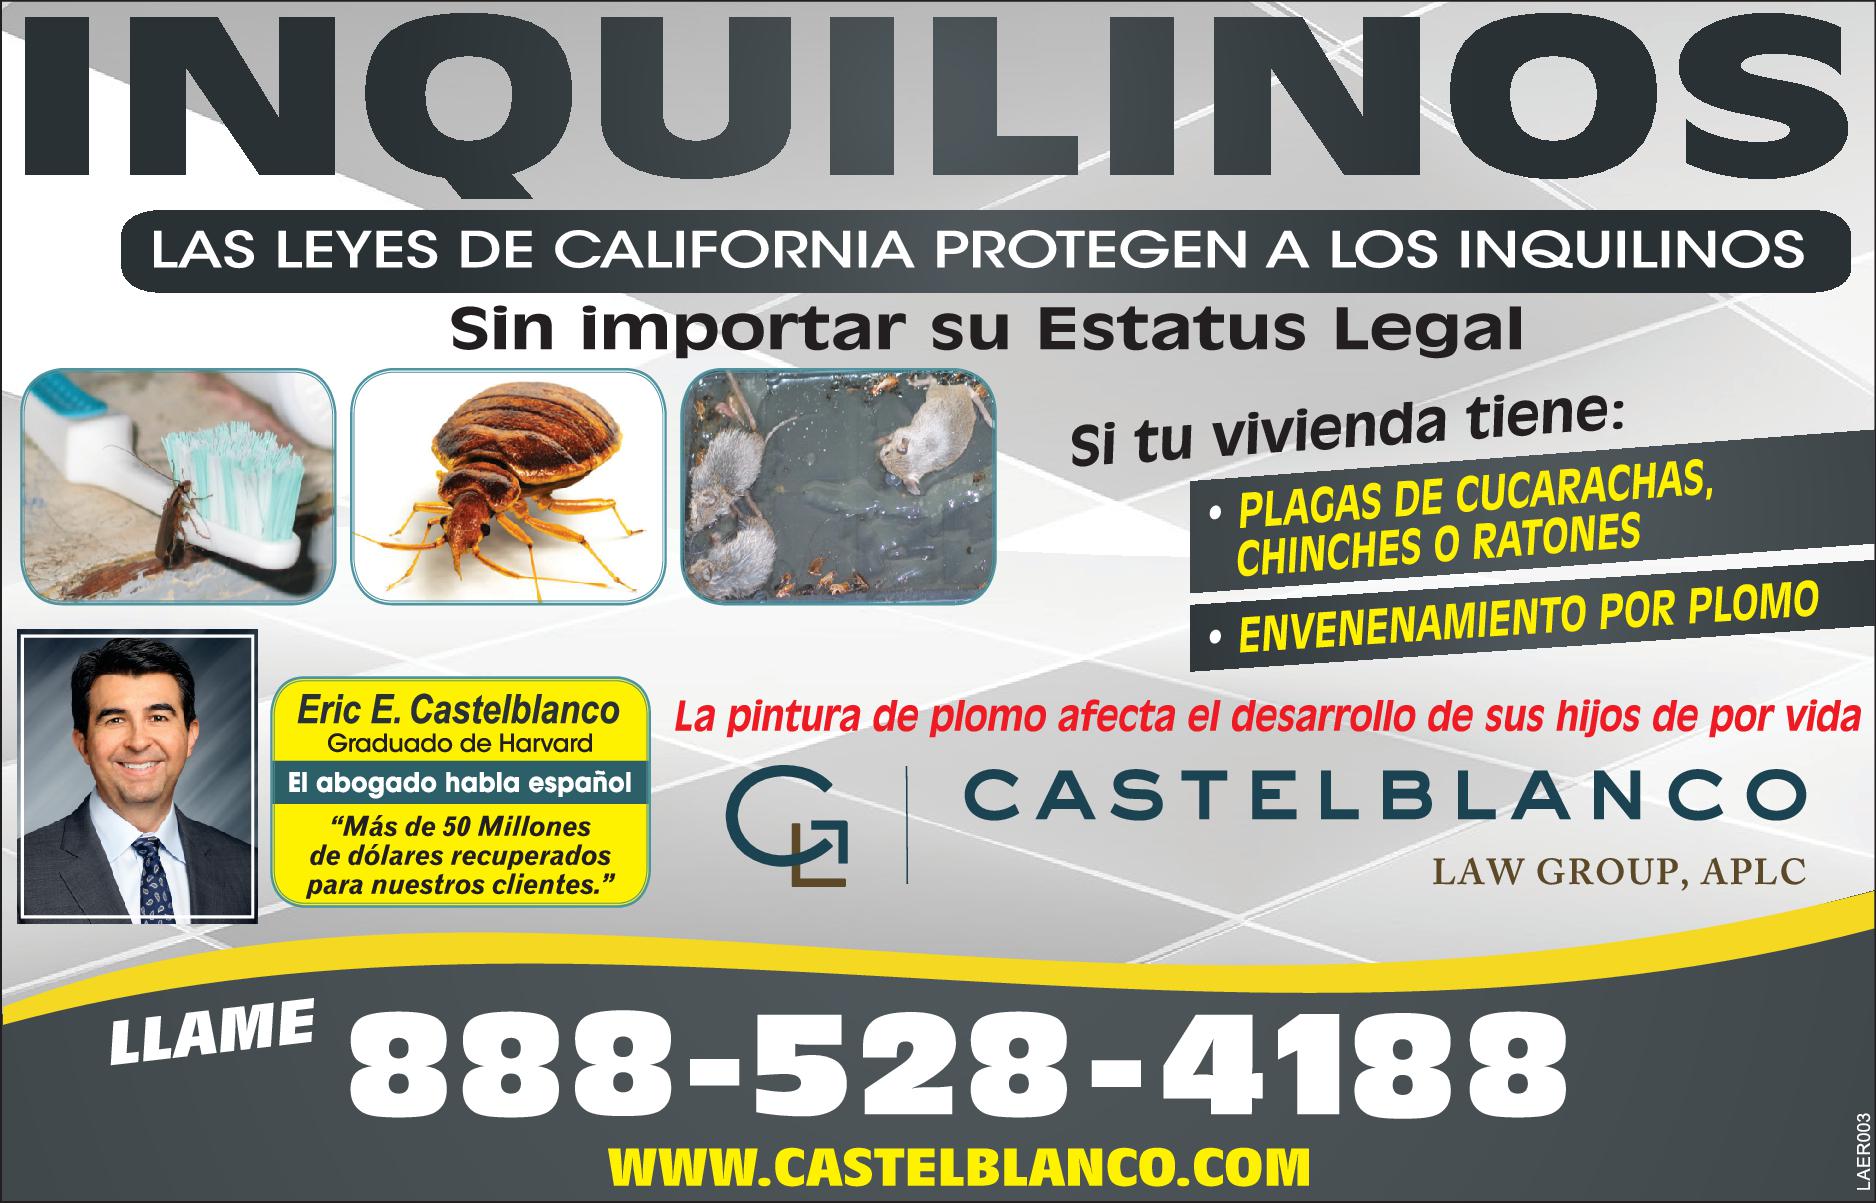 Castelblanco Law Group, Aplc